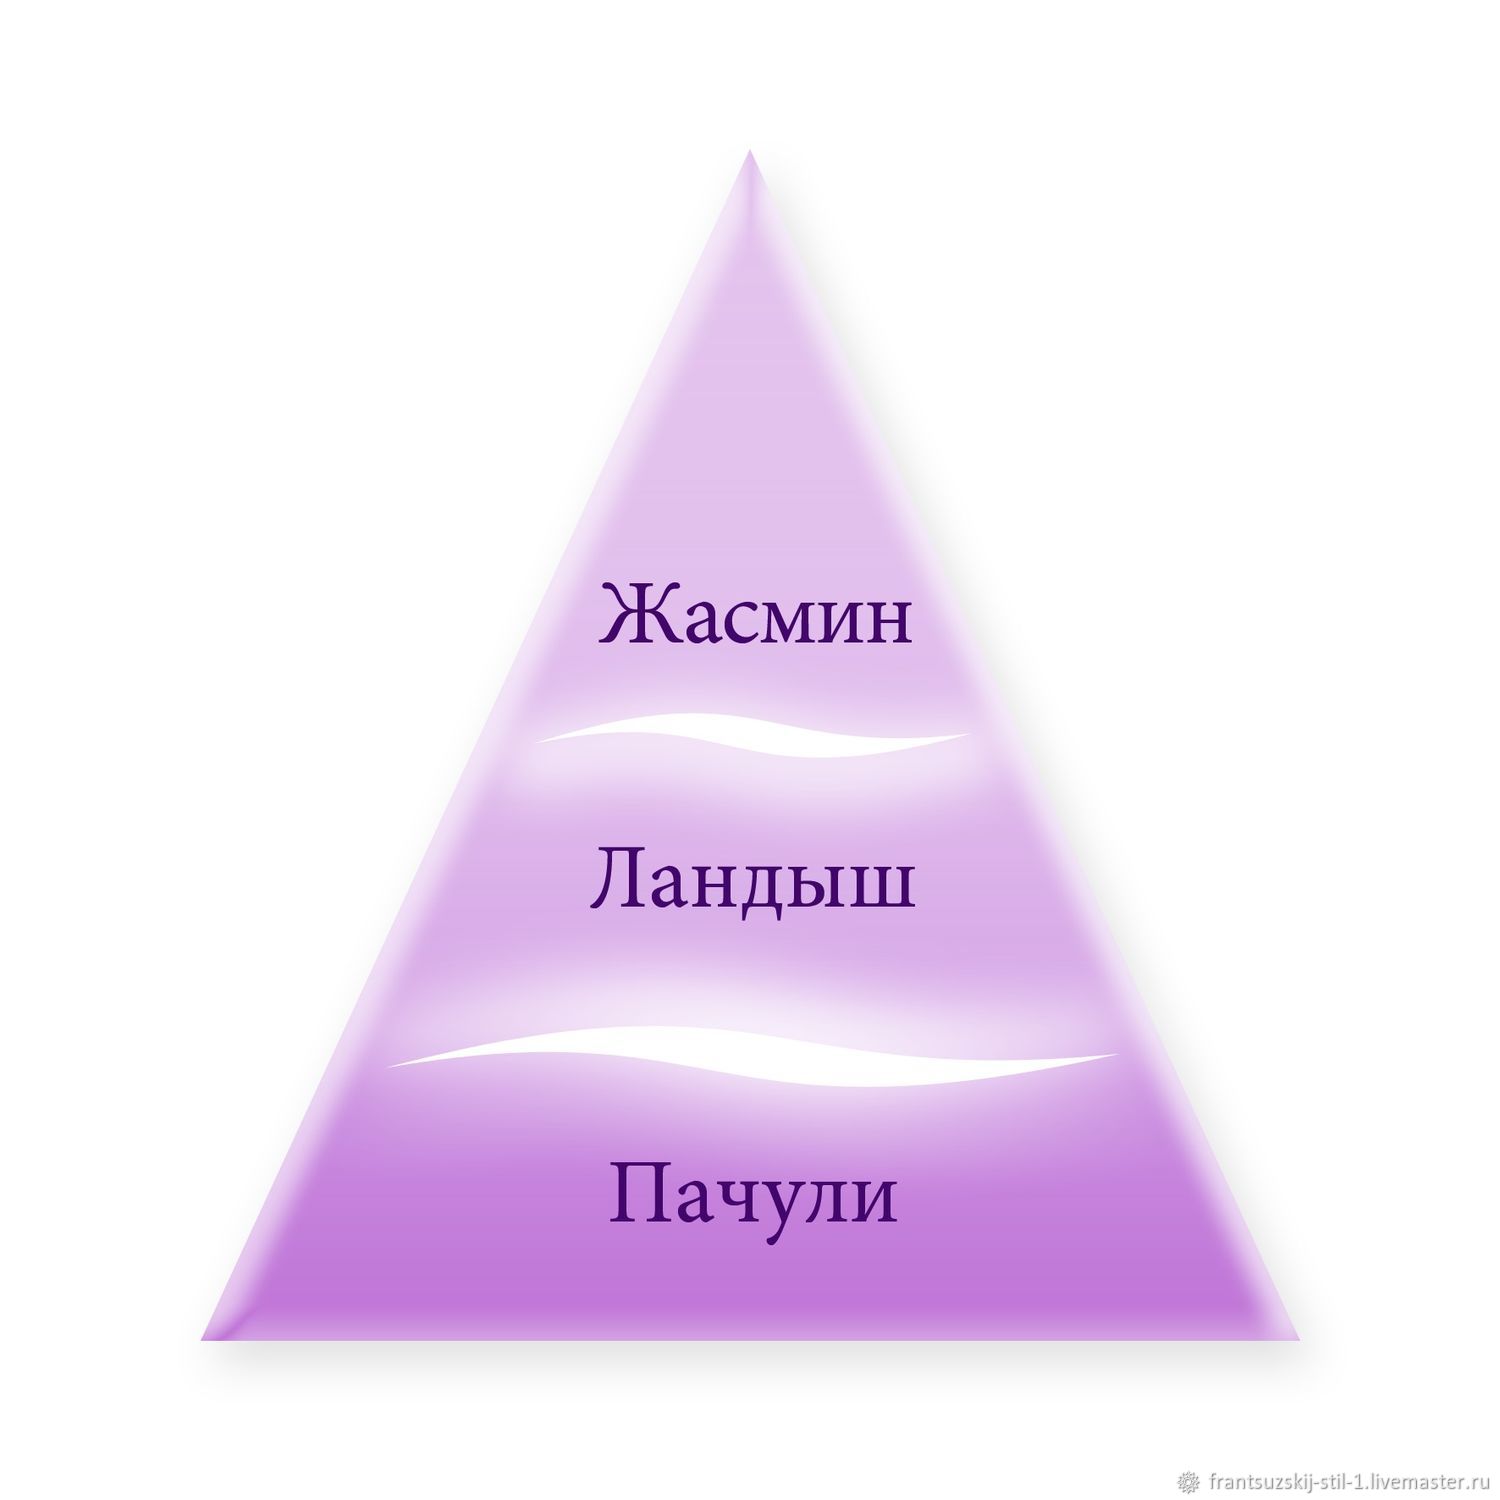 Пирамида туалетной воды. Пирамида аромата. Пирамида ароматов в парфюмерии. Пирамида запаха духов. Ольфакторная пирамида аромата.